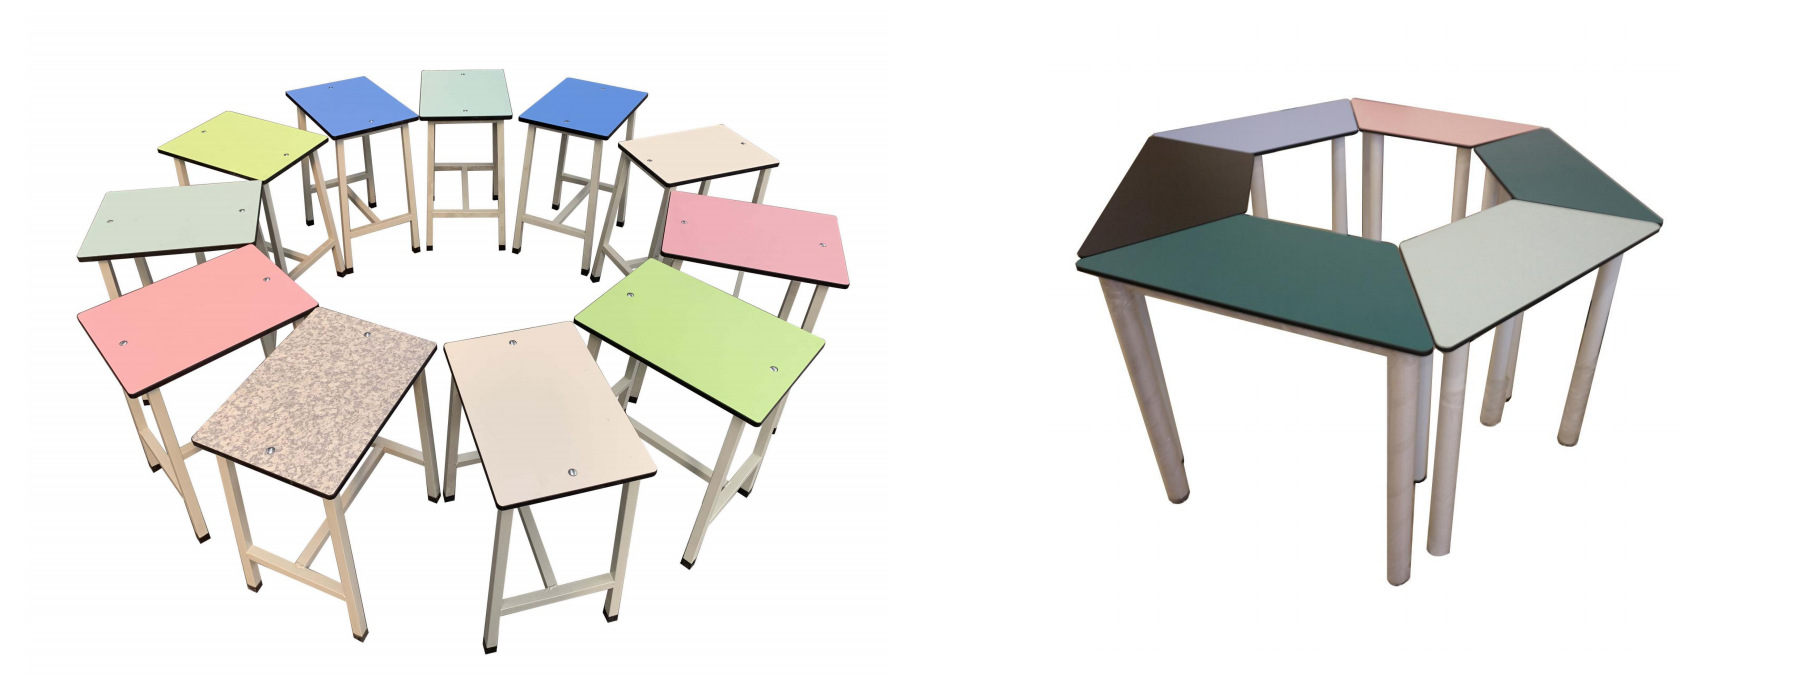 compact phenoli c school desk and chair (2)